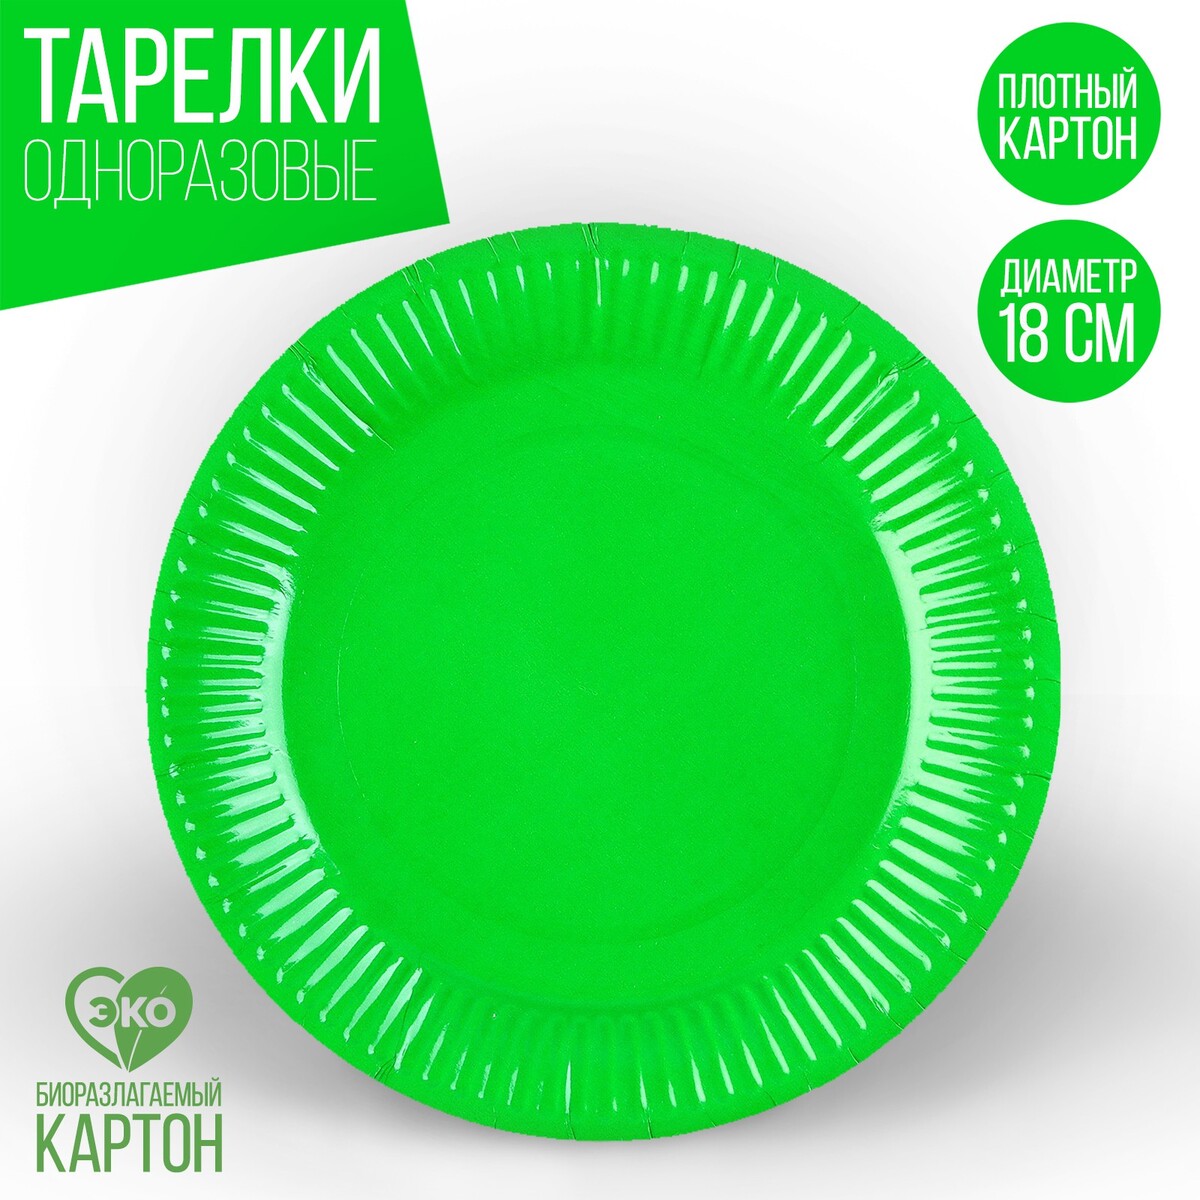 Тарелка одноразовая бумажная однотонная, зеленый цвет 18 см, набор 10 штук тарелка одноразовая бумажная однотонная зеленый 18 см набор 10 штук